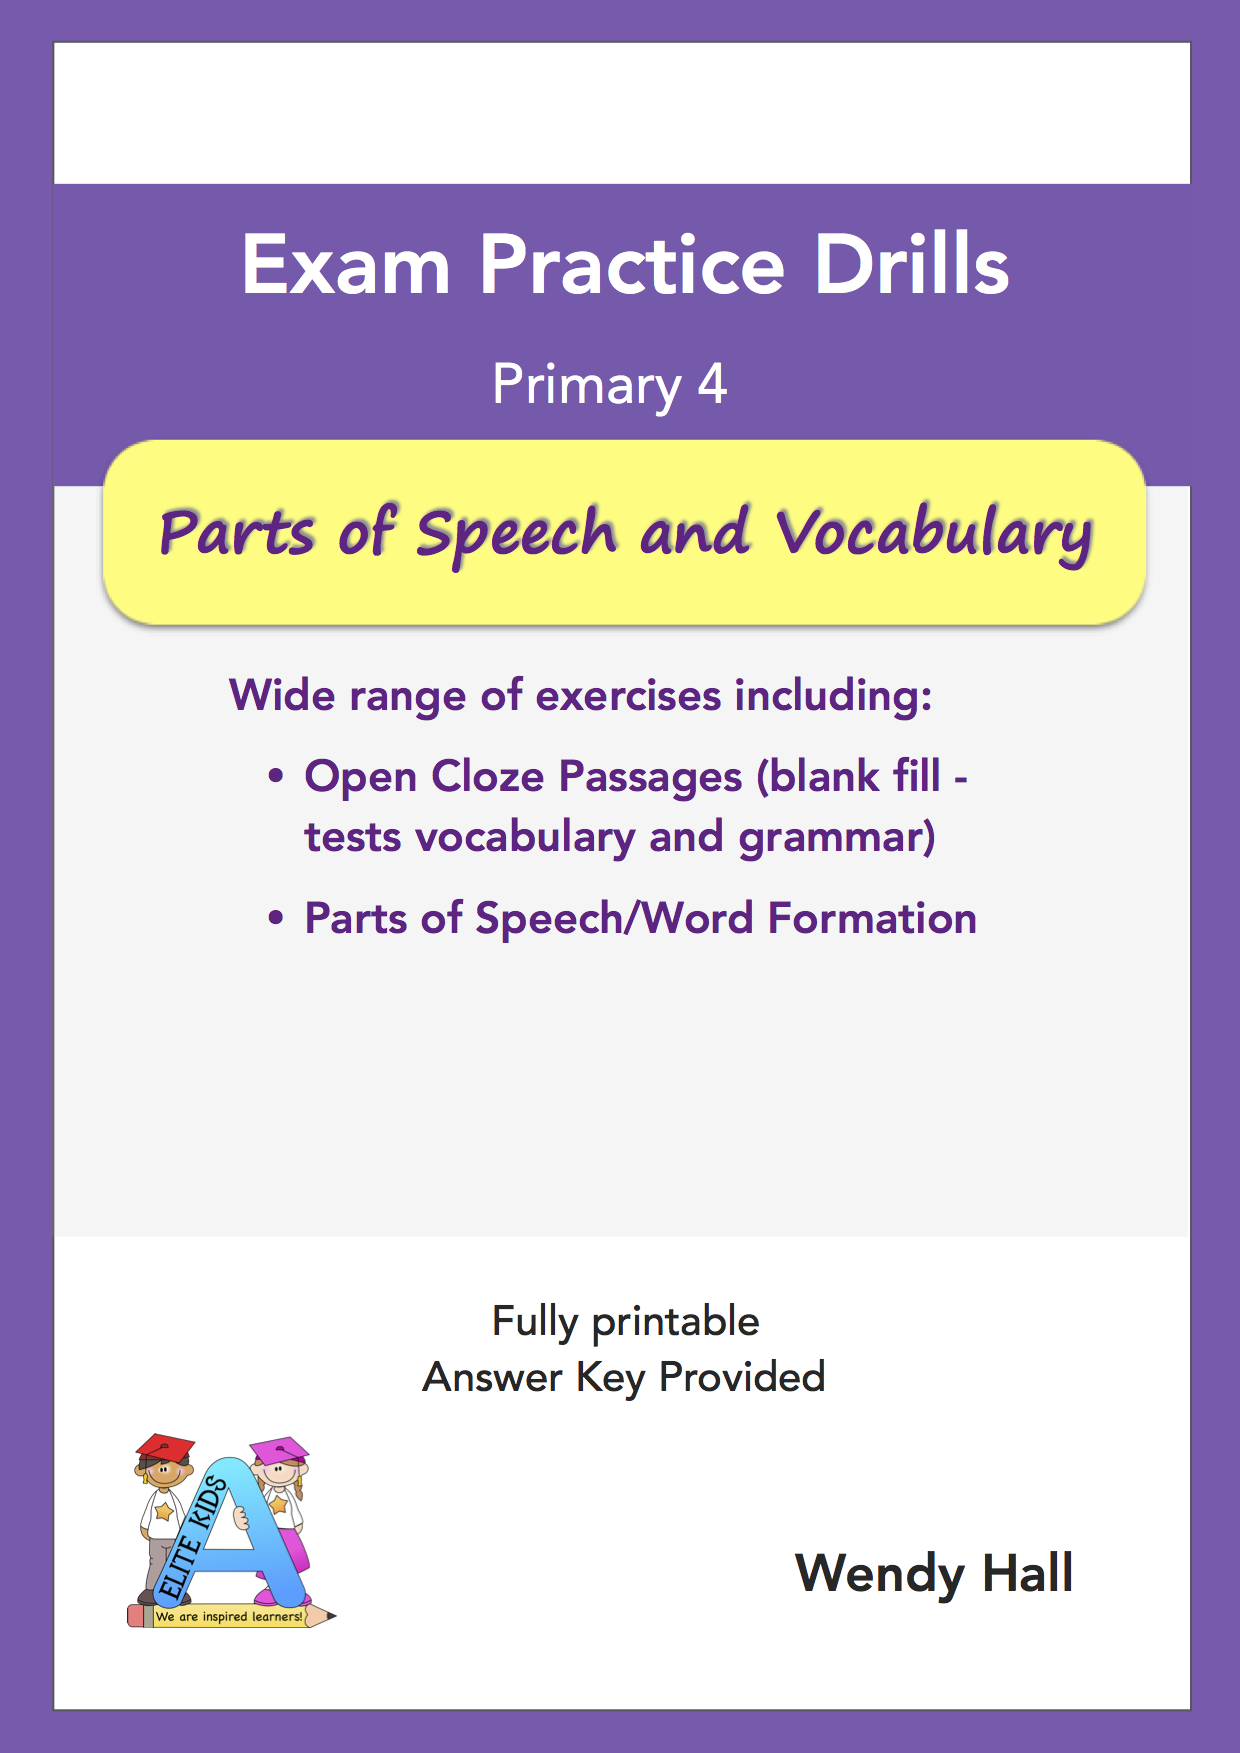 Elite Kids | Exam Practice Drills - Parts of speech and vocabulary - Primary 4